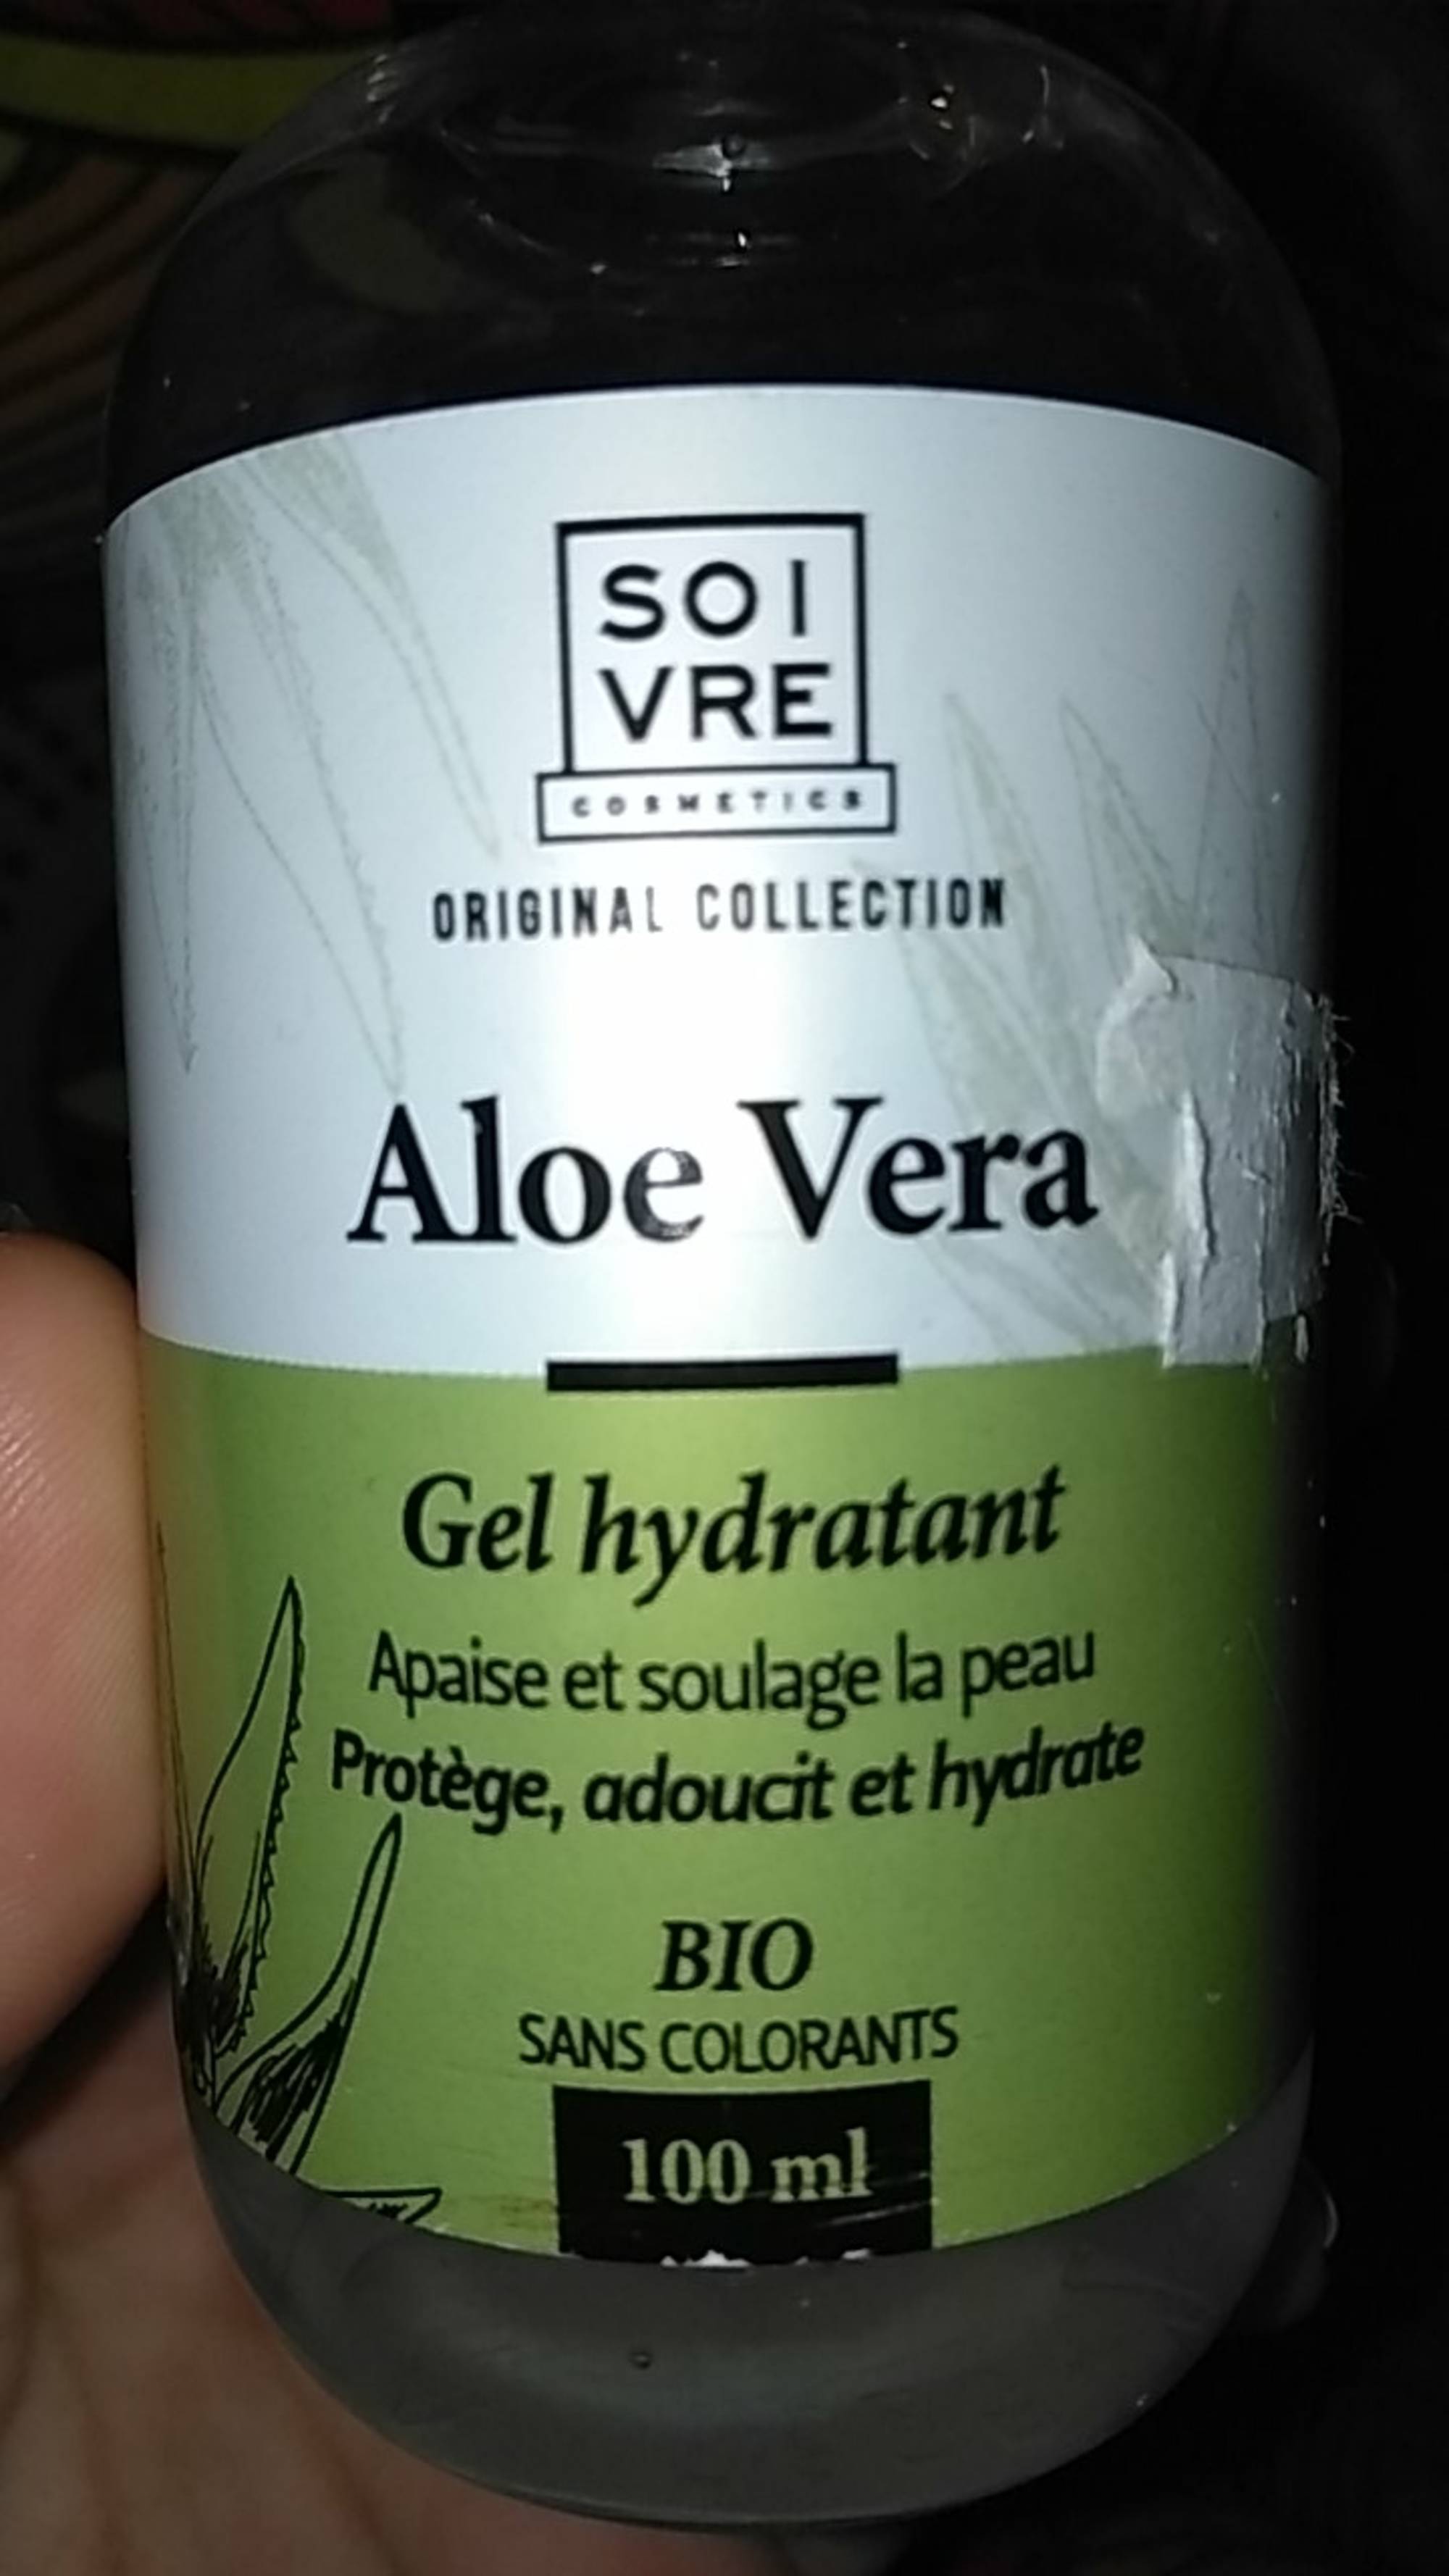 SOIVRE - Gel hydratant aloe vera